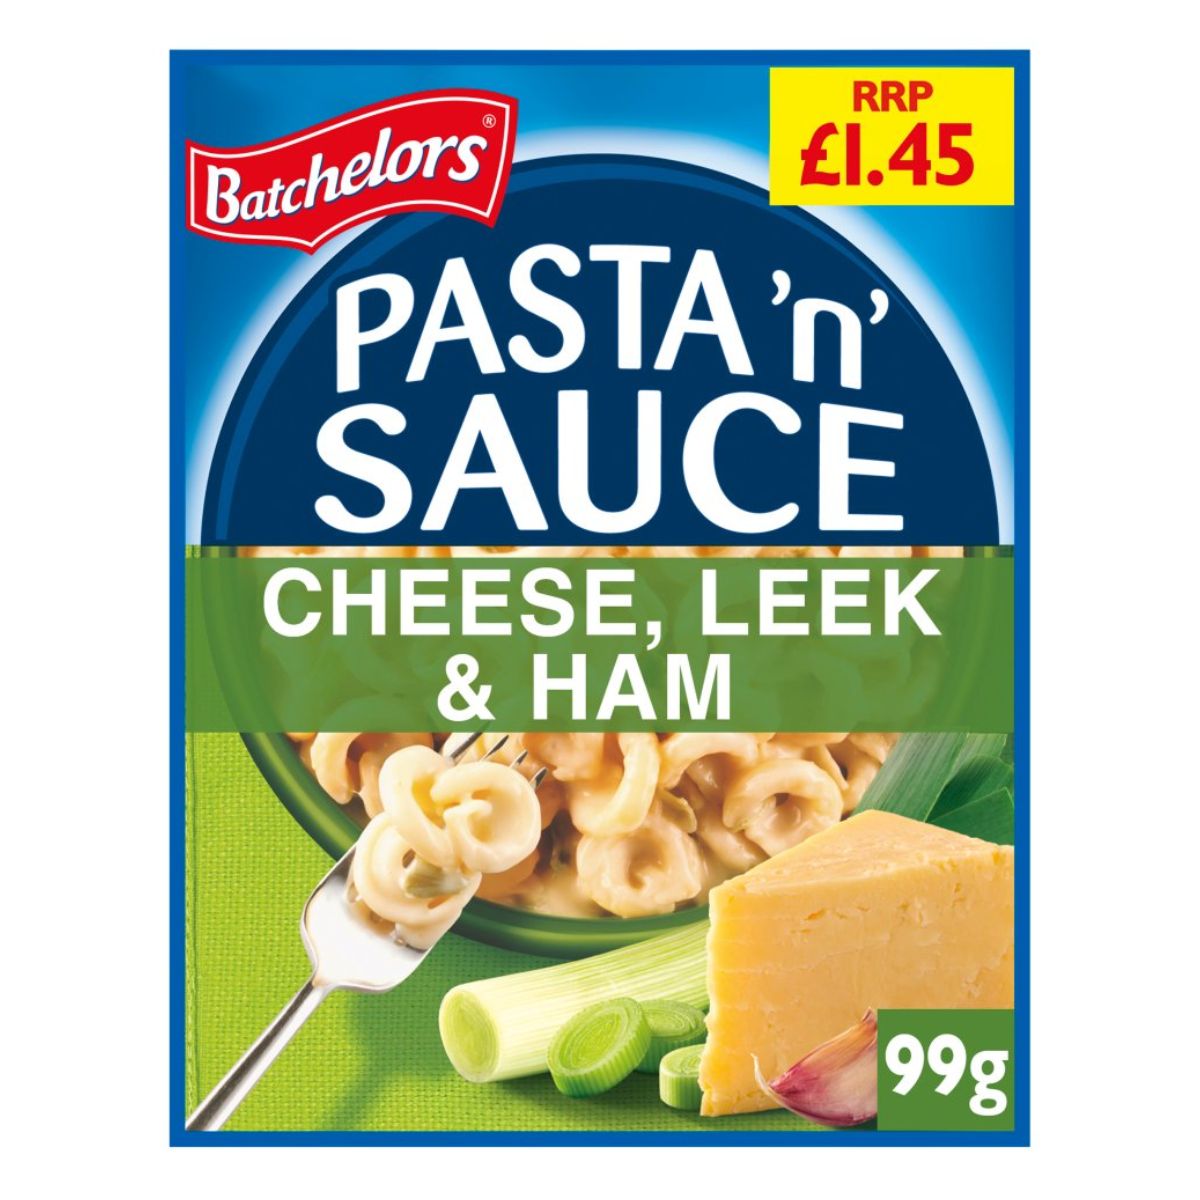 Batchelors - Pasta n Sauce Cheese, Leek & Ham Flavour Pasta Sachet - 99g's pasta sauce cheese leek & ham.